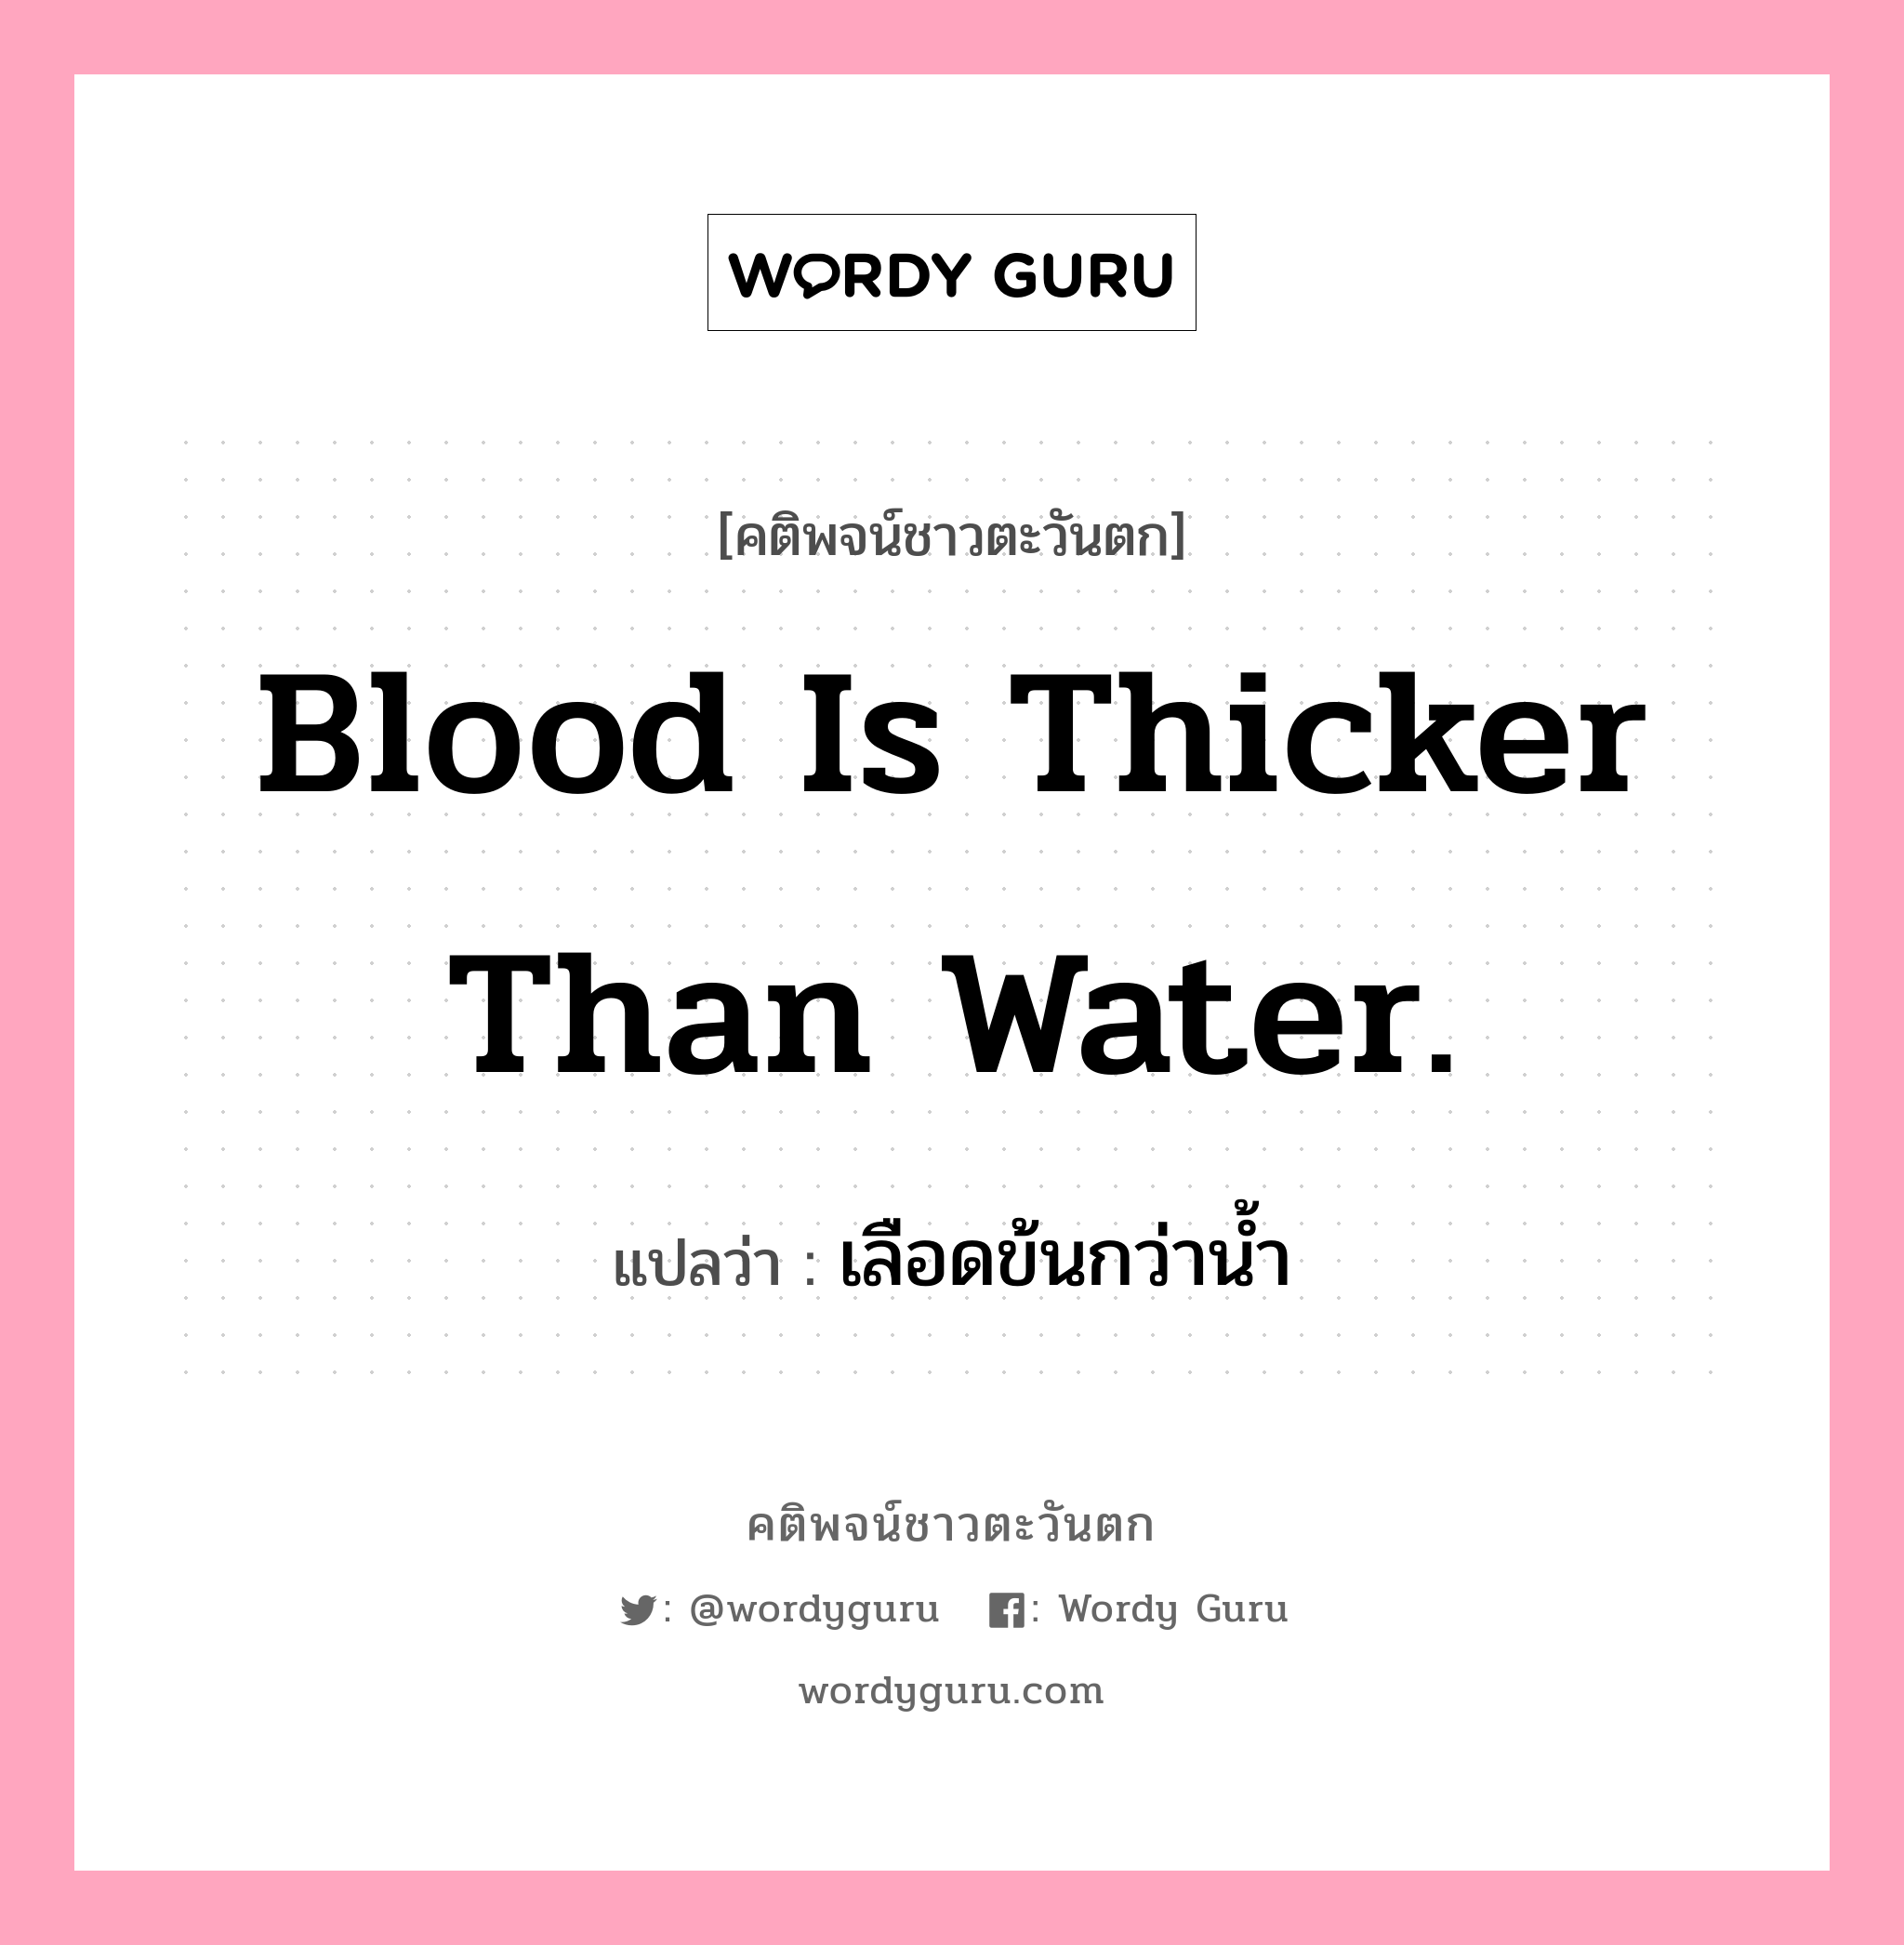 Blood is thicker than water., คติพจน์ชาวตะวันตก Blood is thicker than water. แปลว่า เลือดข้นกว่าน้ำ